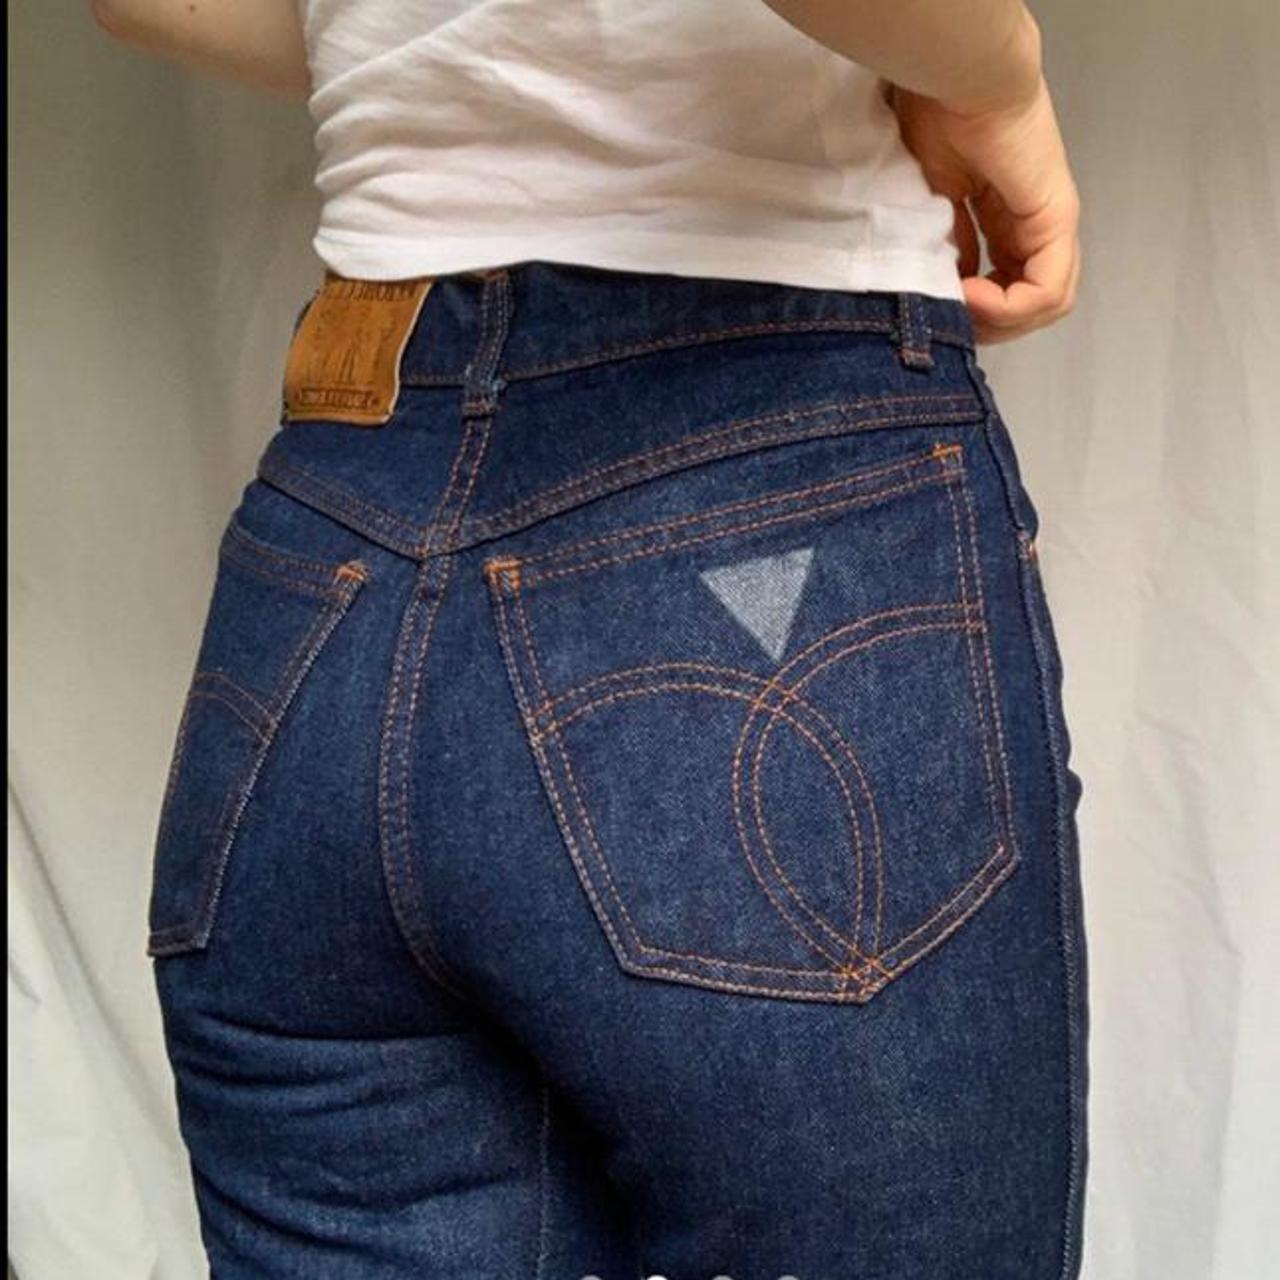 ICONIC Fiorucci jeans 🤠 Straight leg, classic fit.... - Depop